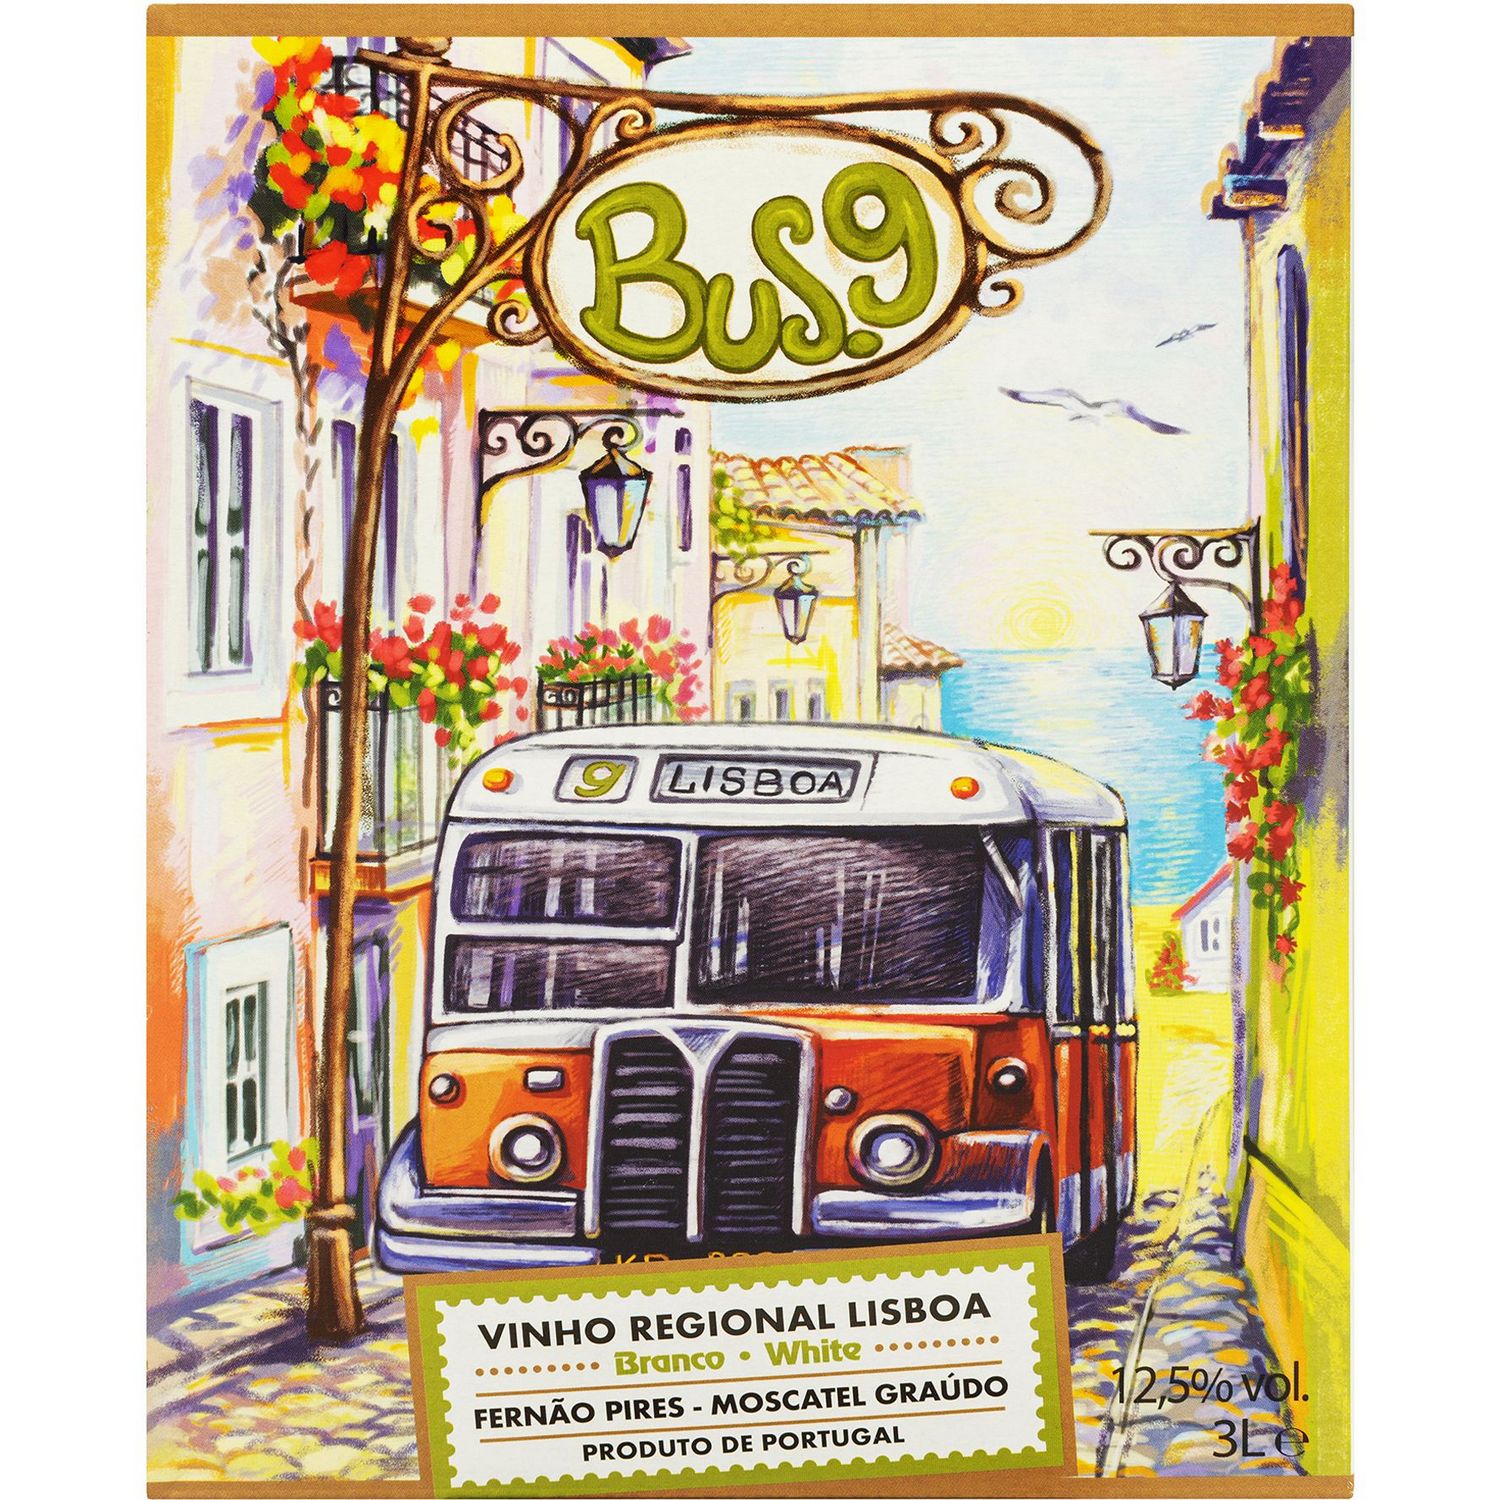 Вино Bus.9 Vinho Regional Lisboa Fernao Pires-Moscatel Graudo, біле, сухе, 3 л - фото 1